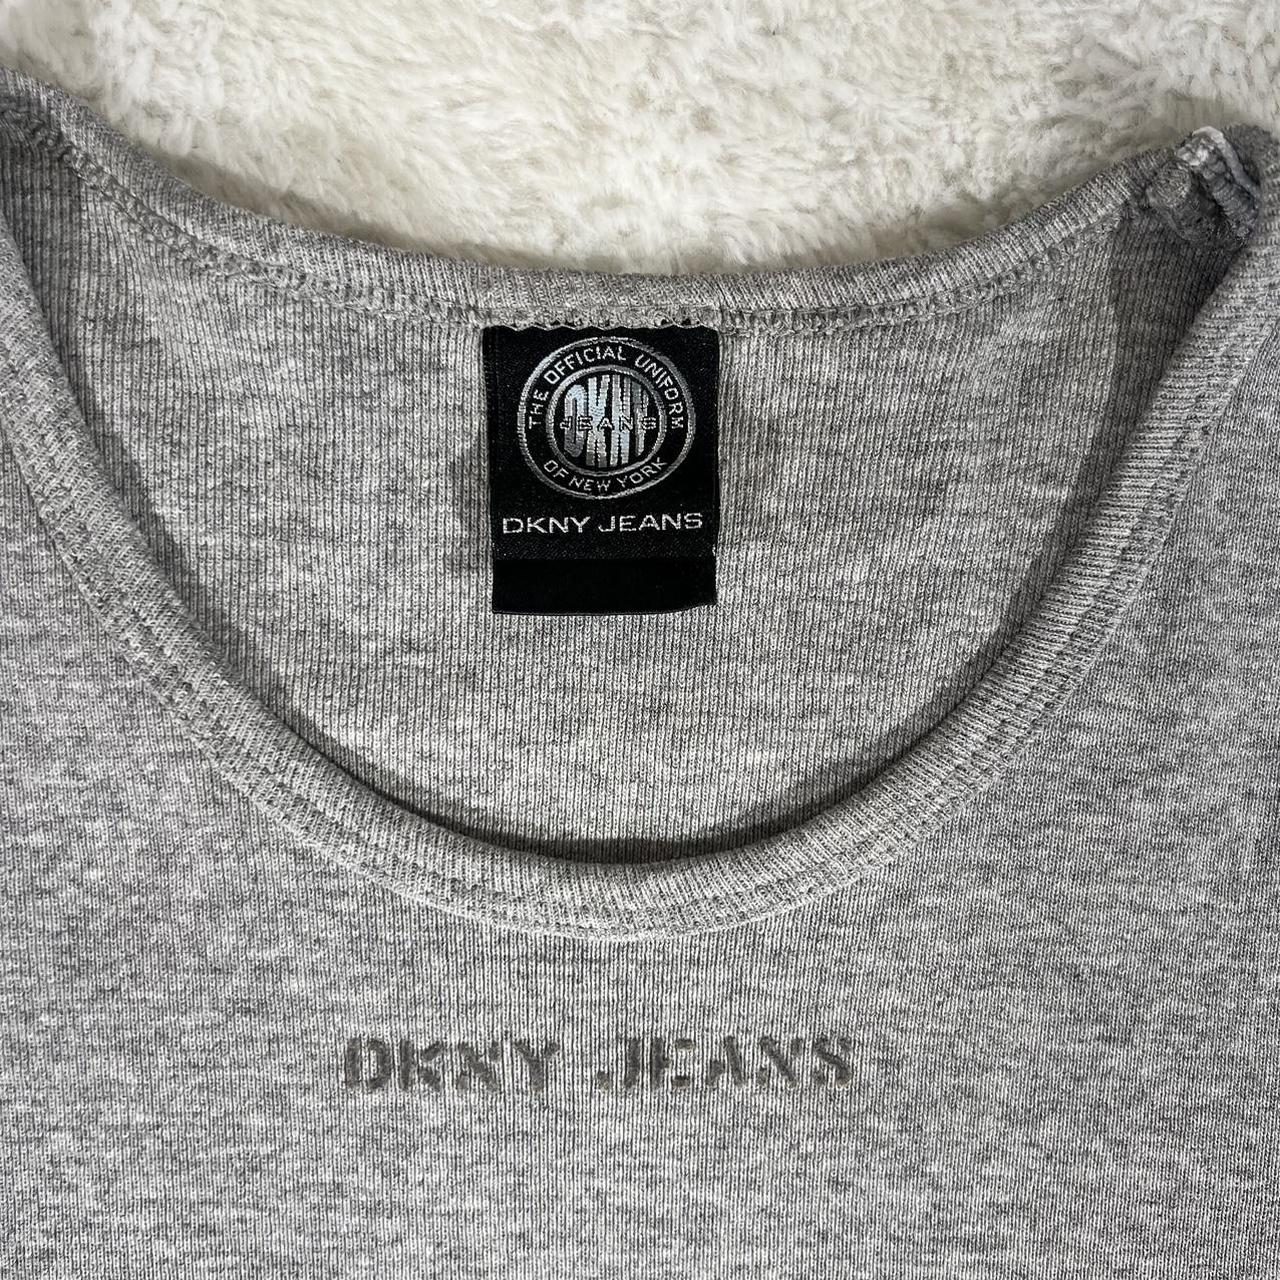 DKNY Women's Grey and Black Vest (3)